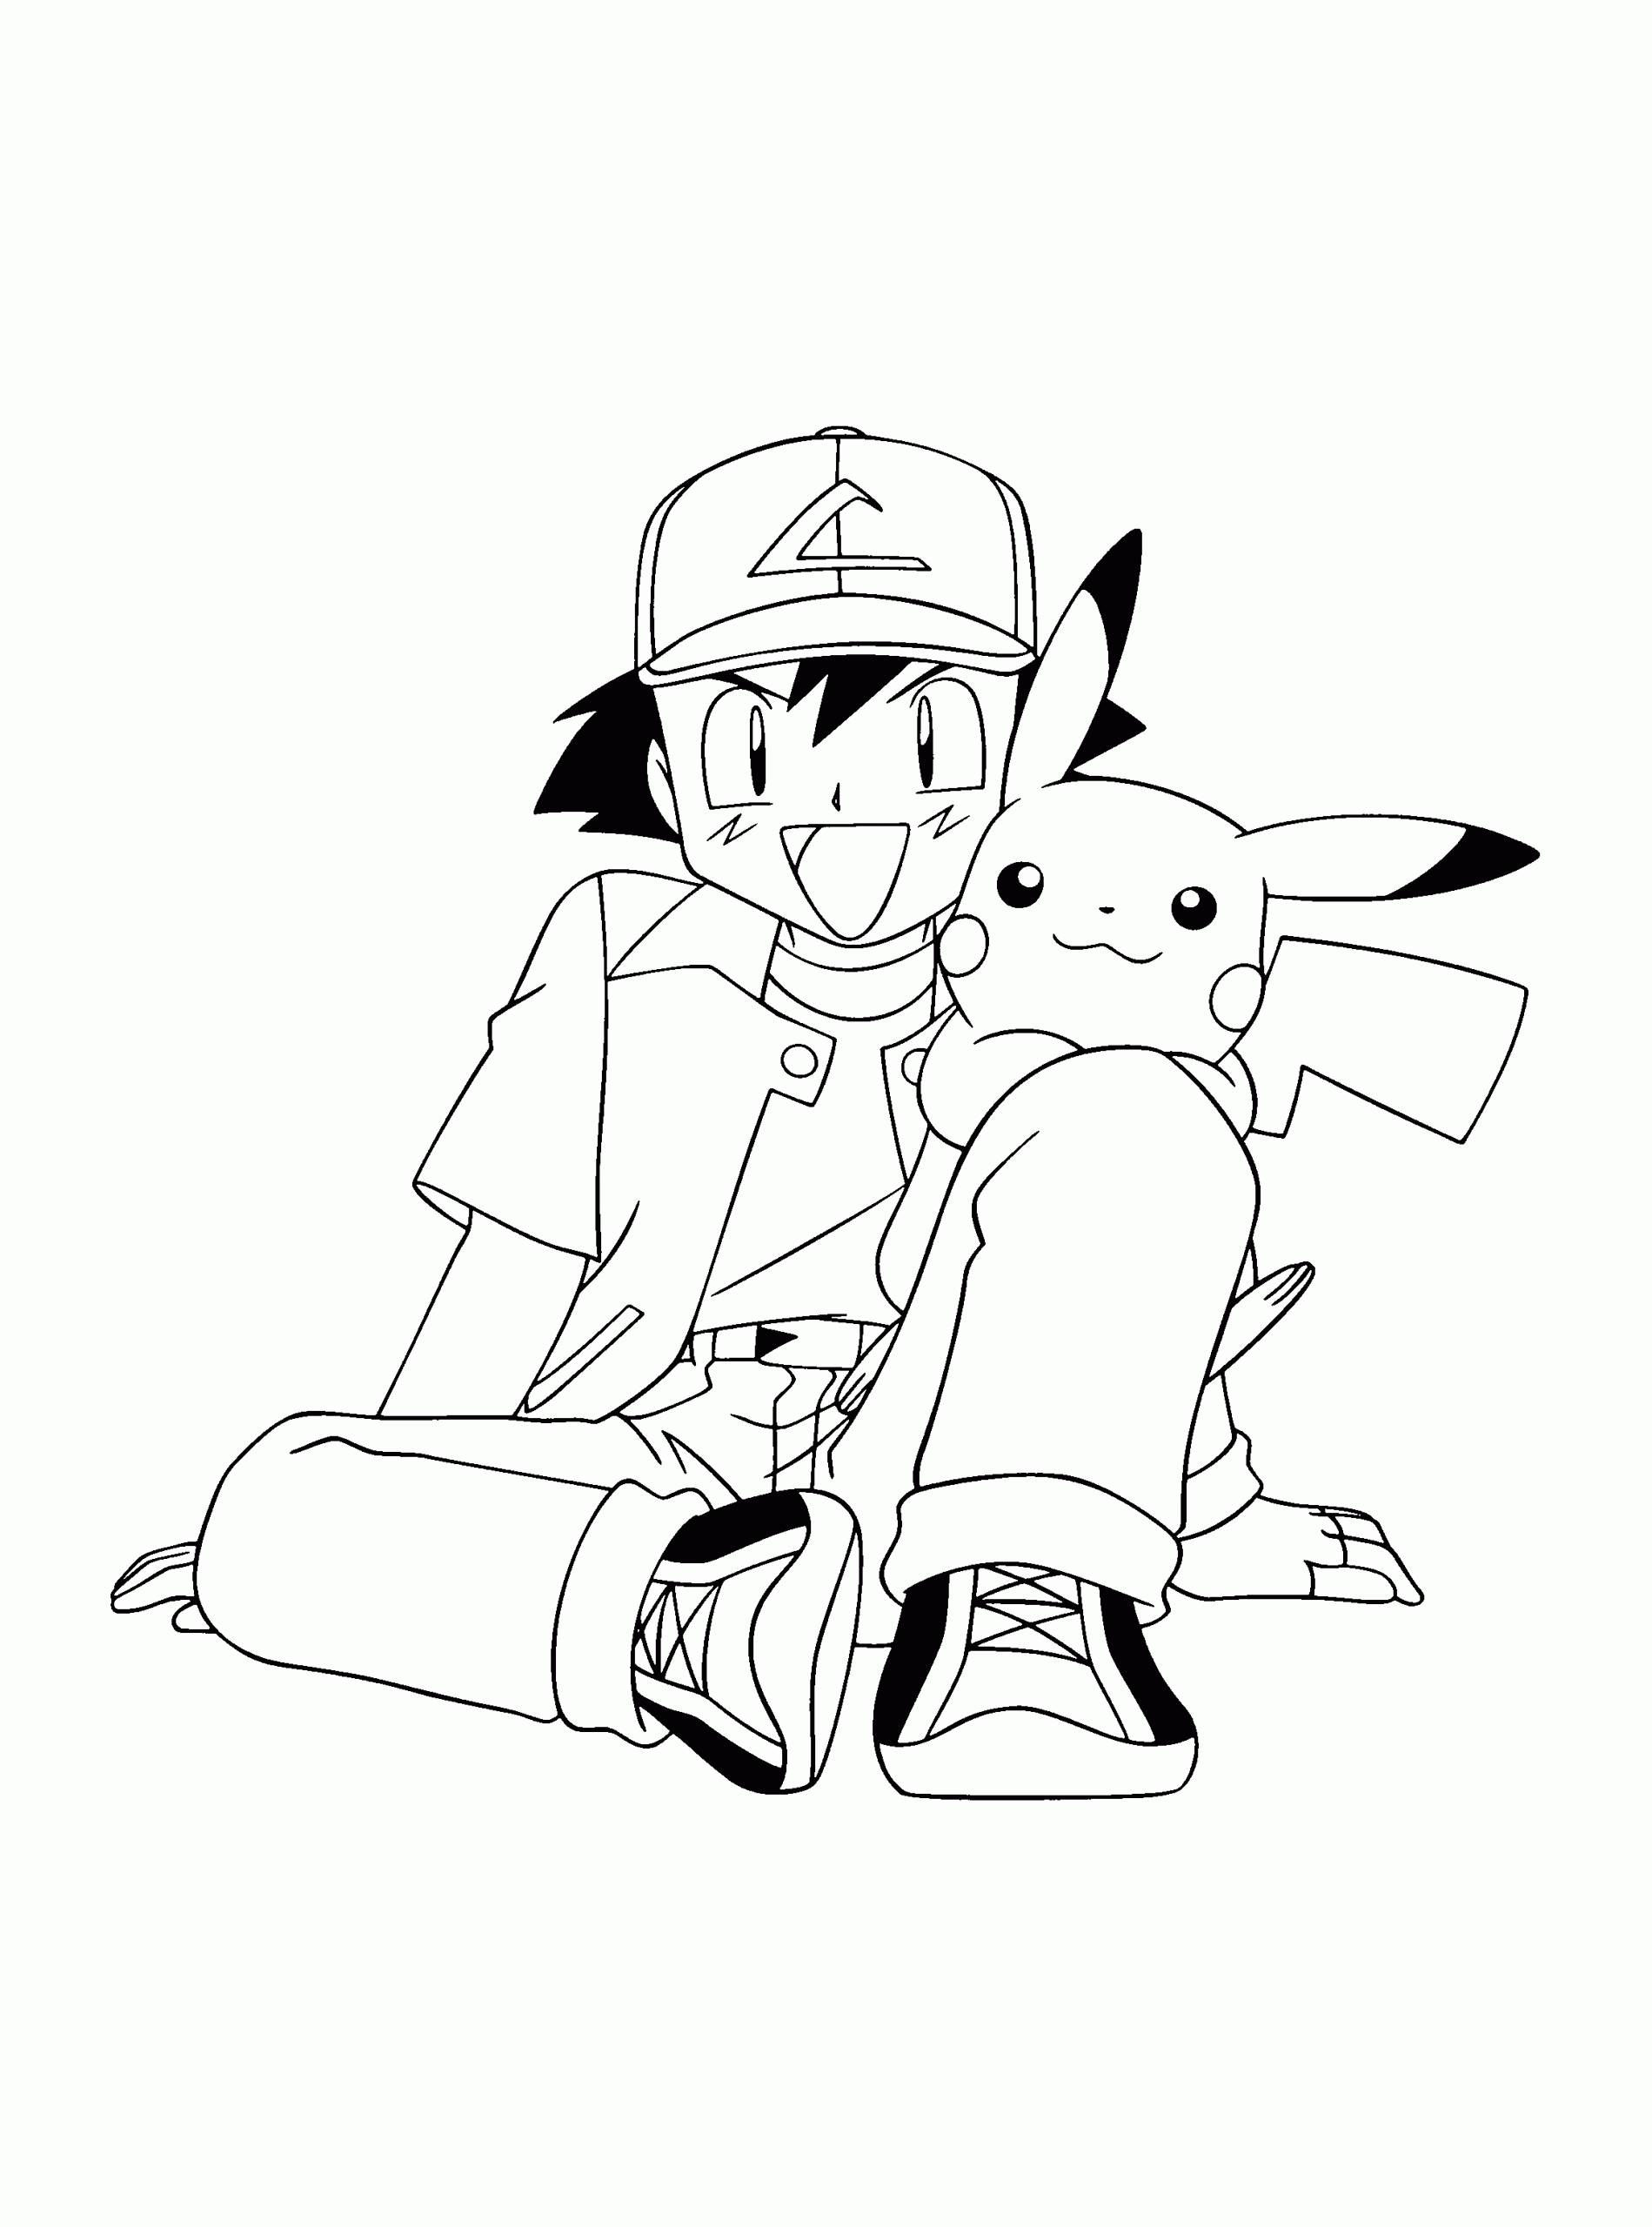 Pikachu and ash